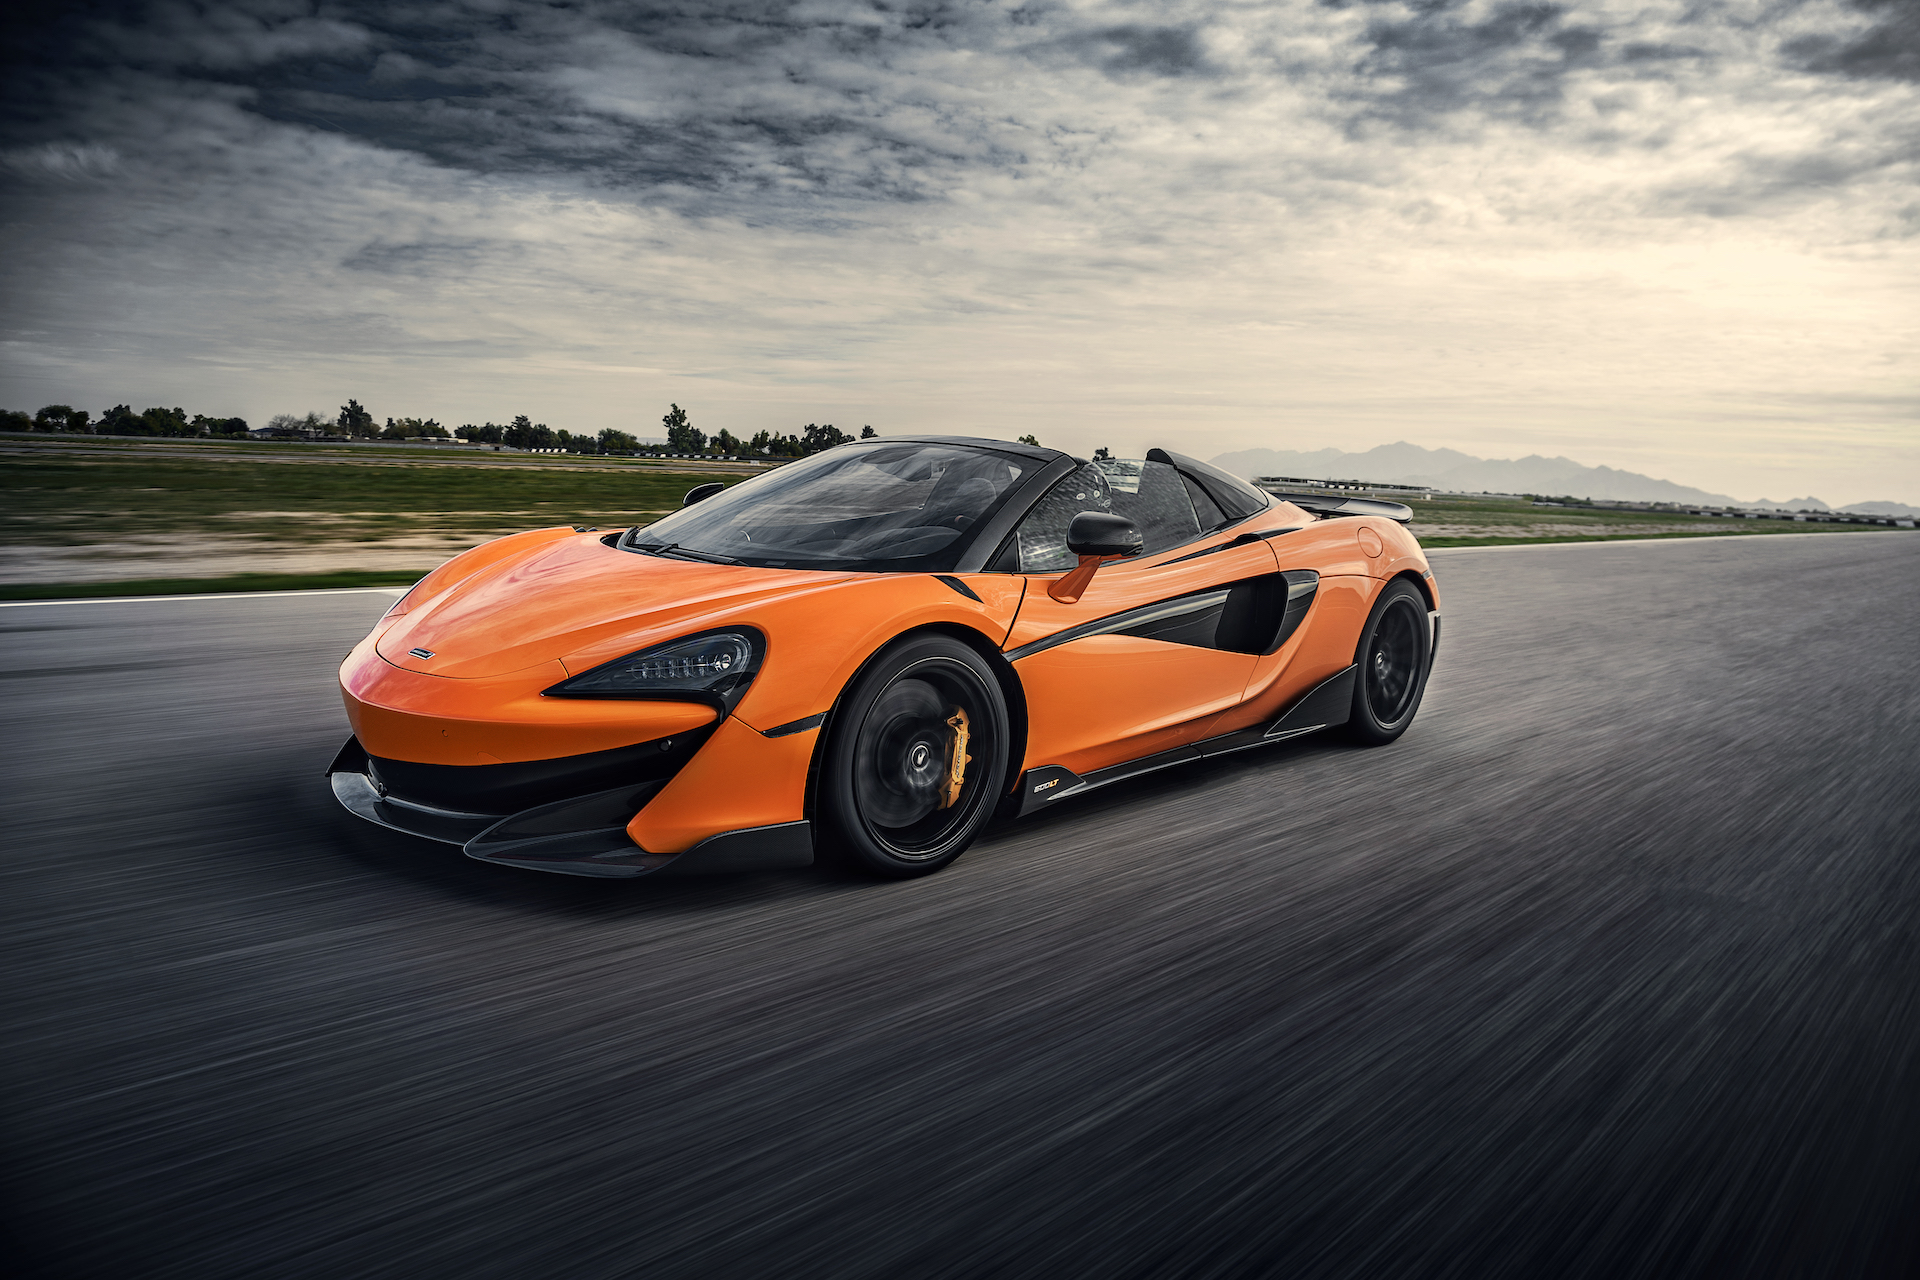 First drive review: 2020 McLaren 600LT Spider sounds serious